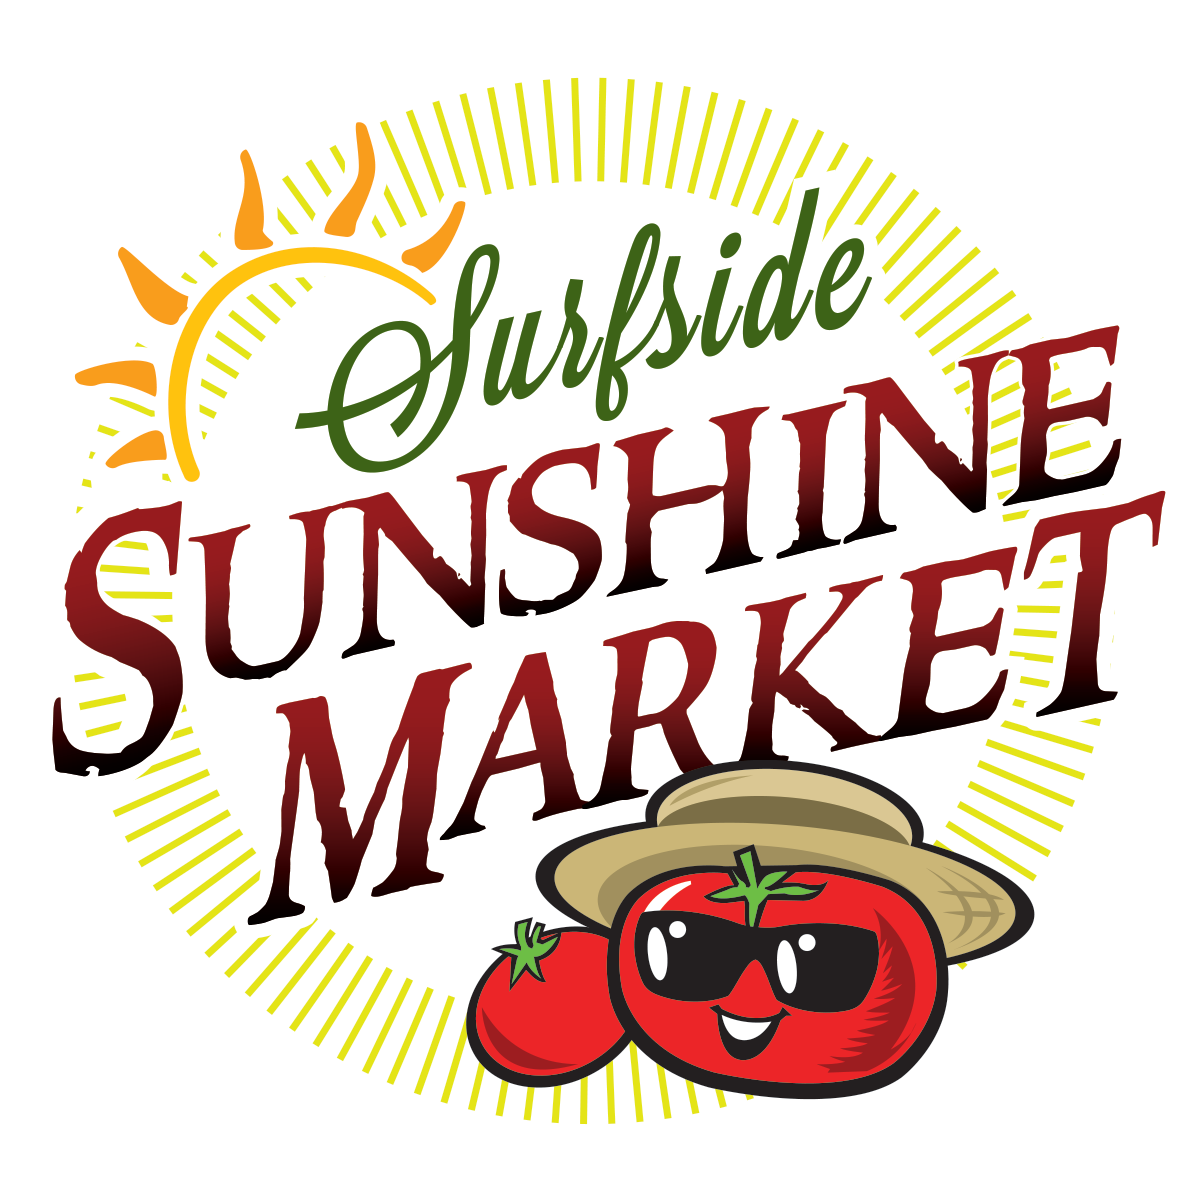 Surfside Sunshine Market logo